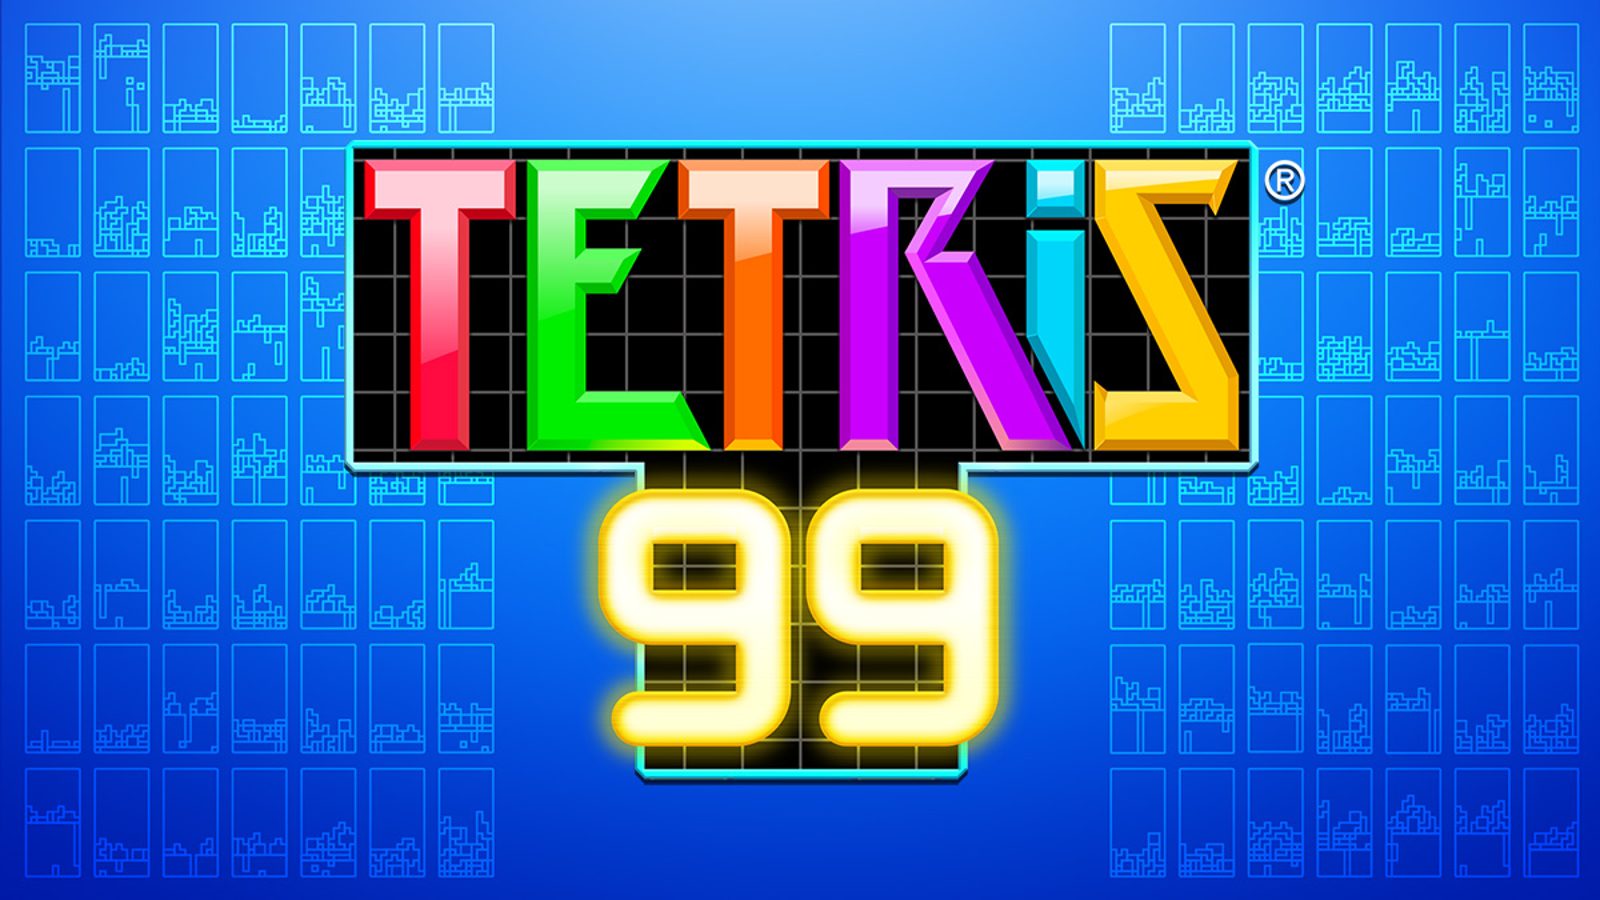 Tetris 99 getting offline multiplayer in new DLC - Polygon